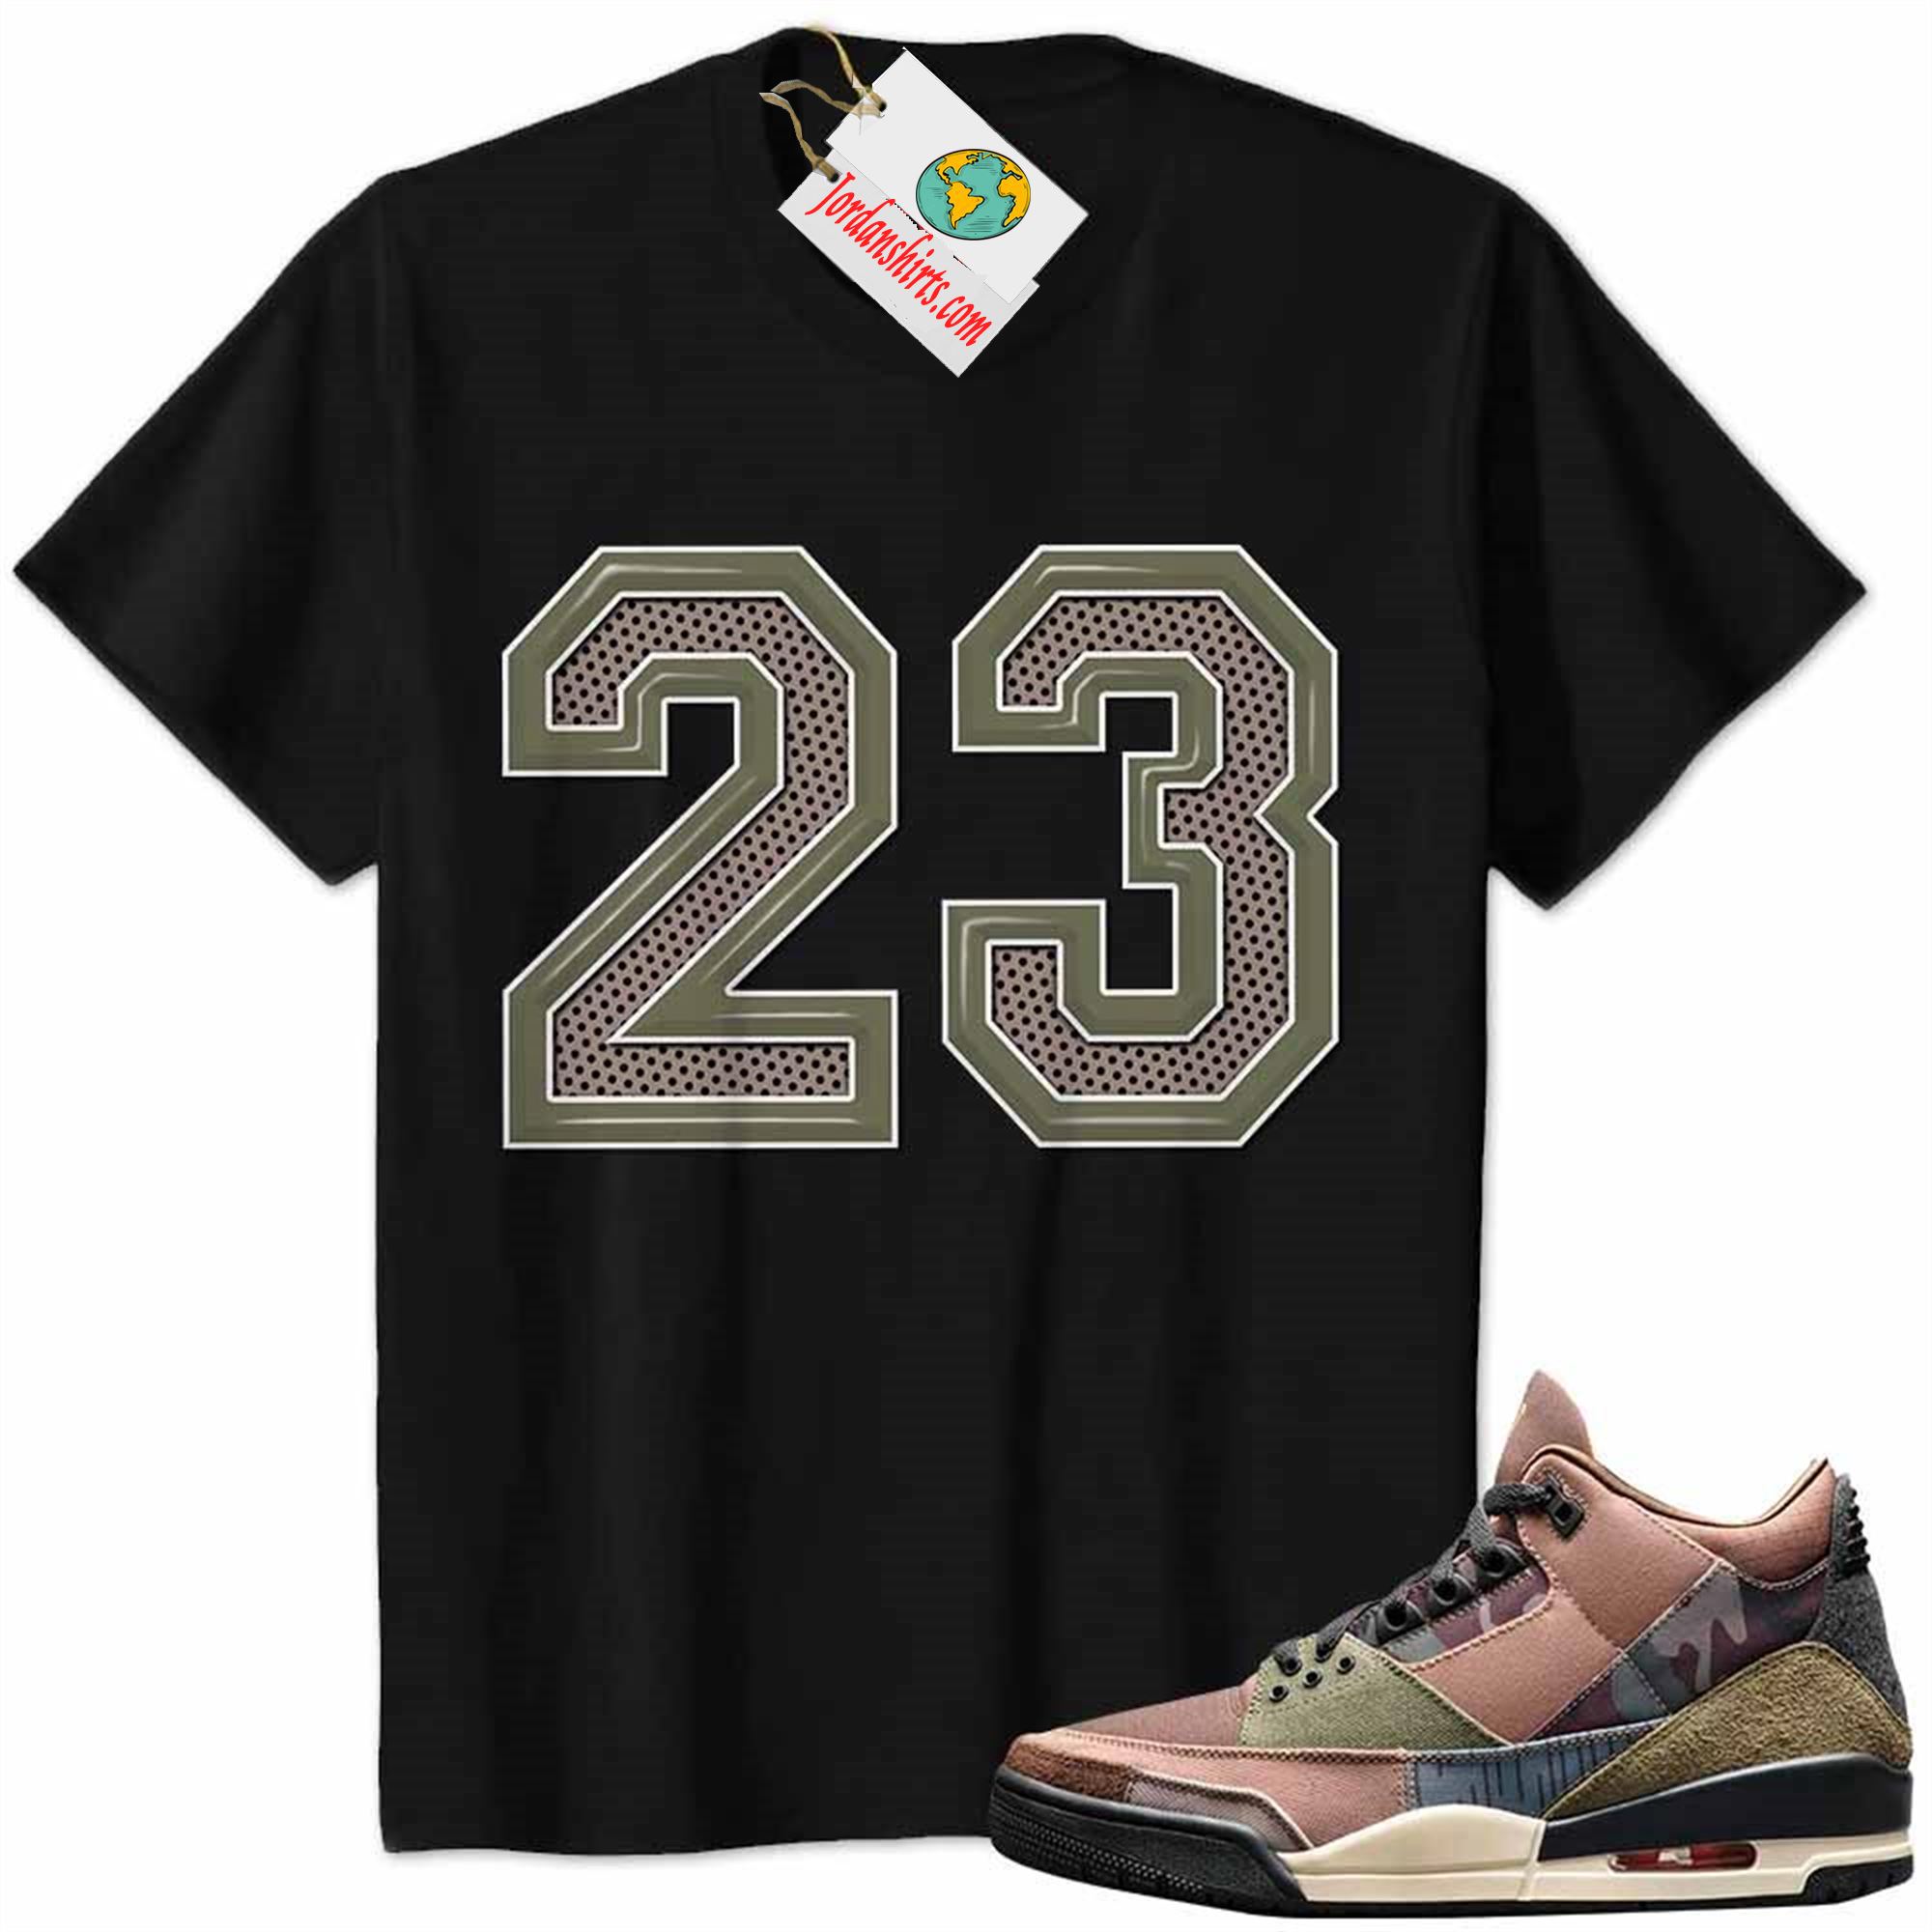 Jordan 3 Shirt, Jordan 3 Patchwork Shirt Michael Jordan Number 23 Black Plus Size Up To 5xl